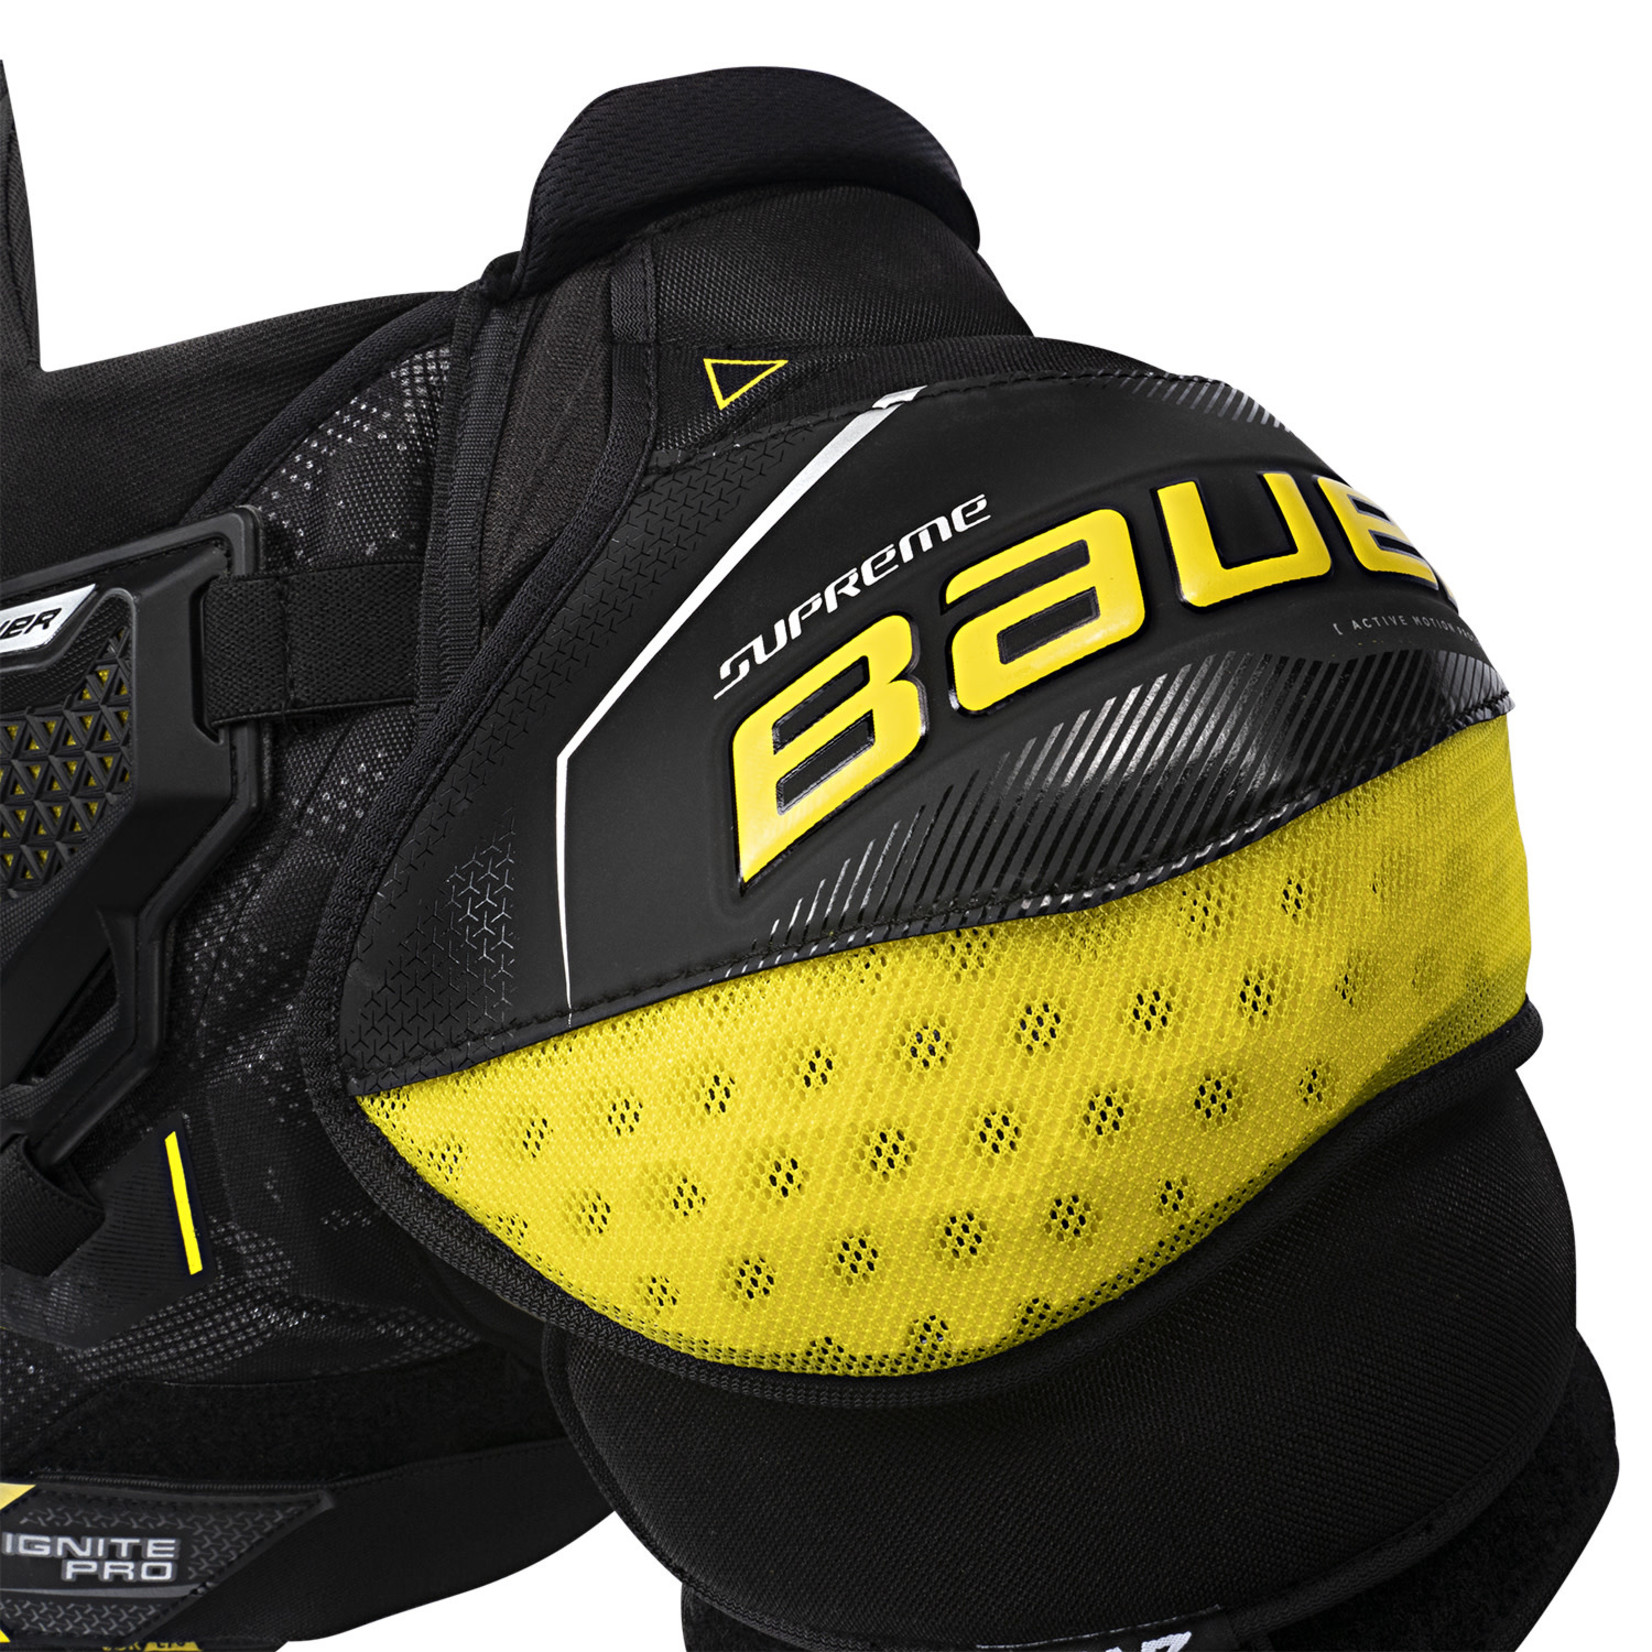 Bauer Bauer Hockey Shoulder Pads, Supreme Ignite Pro, Senior